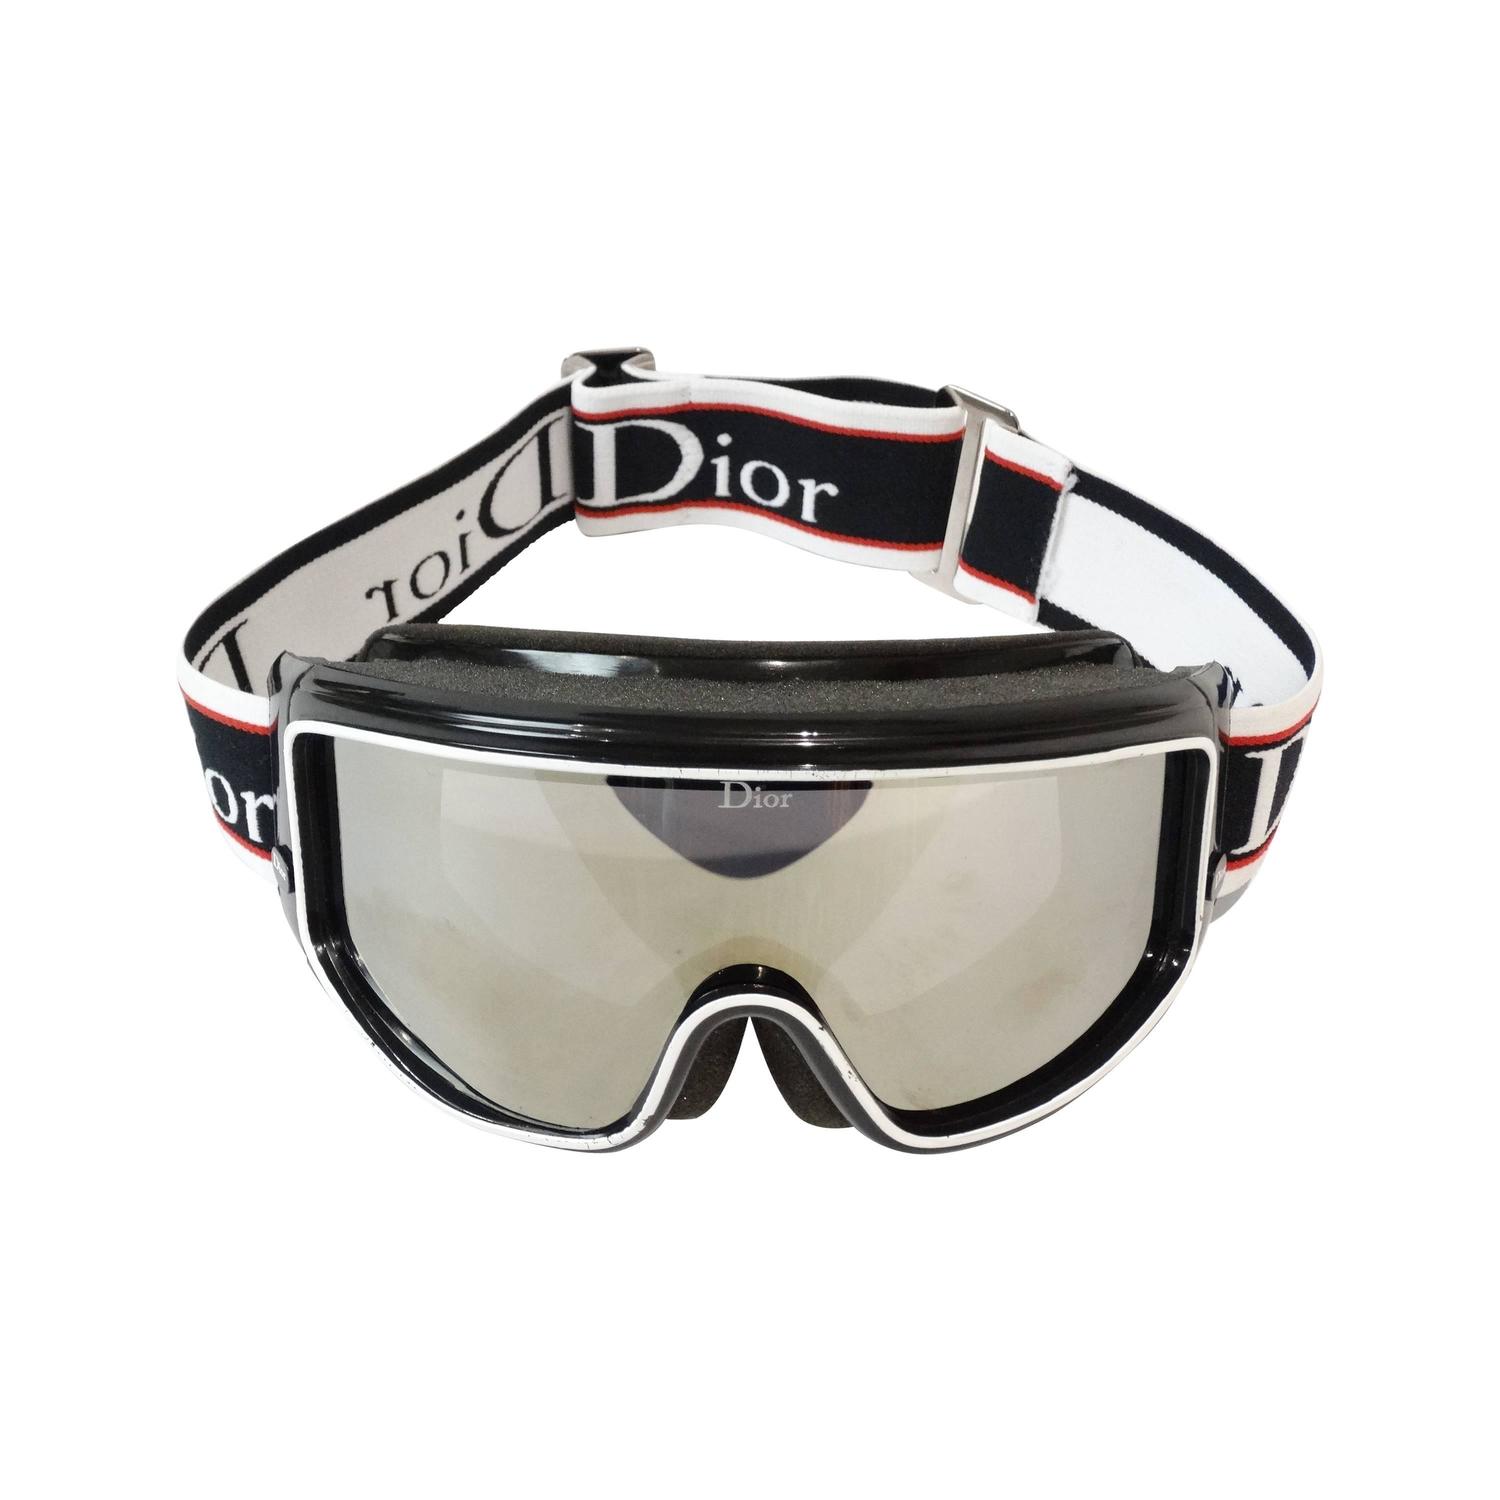 1980s Christian Dior Mirrored Ski Goggles at 1stdibs